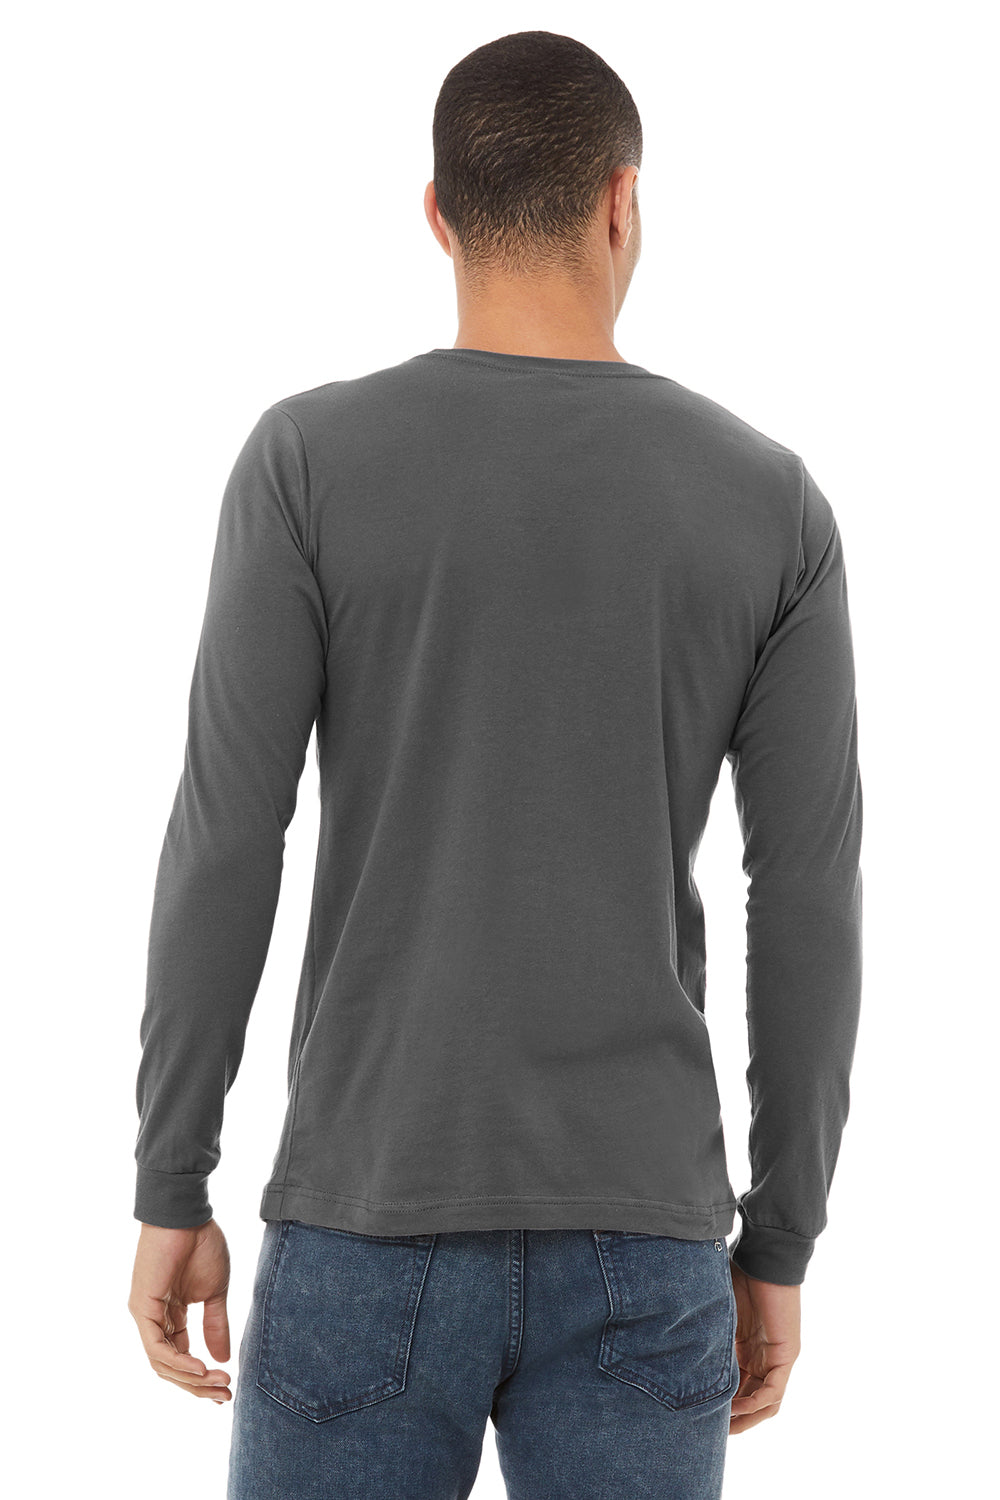 Bella + Canvas BC3501/3501 Mens Jersey Long Sleeve Crewneck T-Shirt Asphalt Grey Model Back